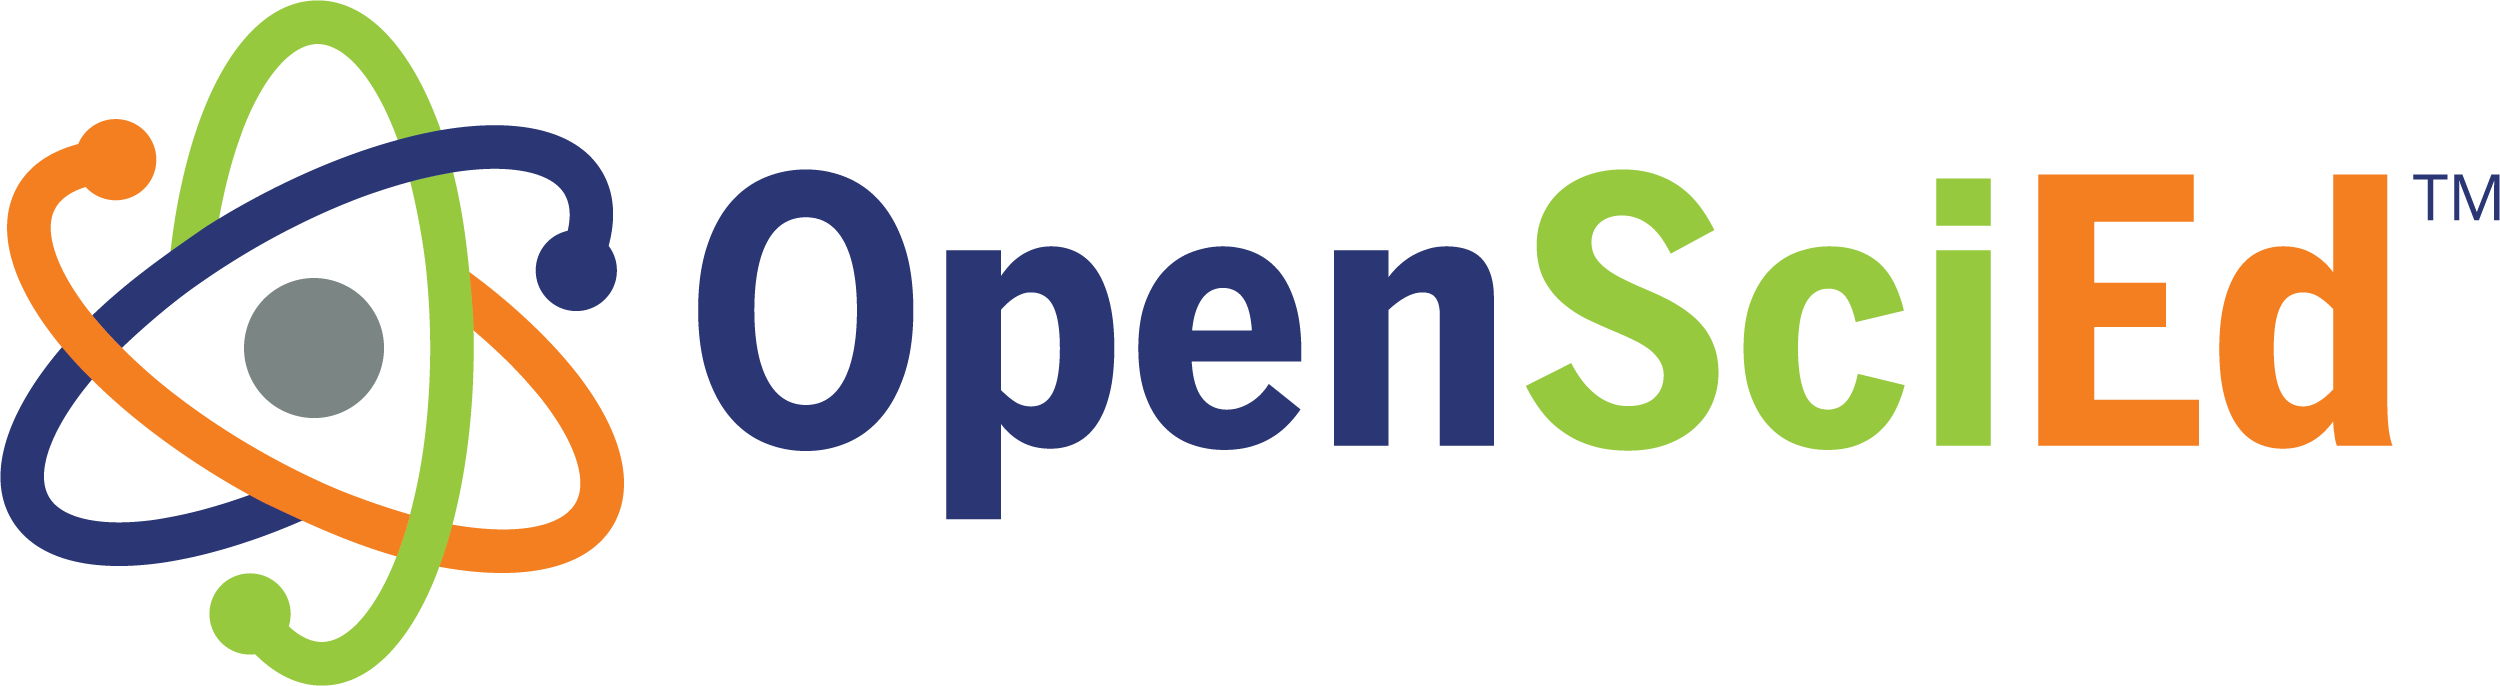 OpenSciEd Logo Horizontal Color TM